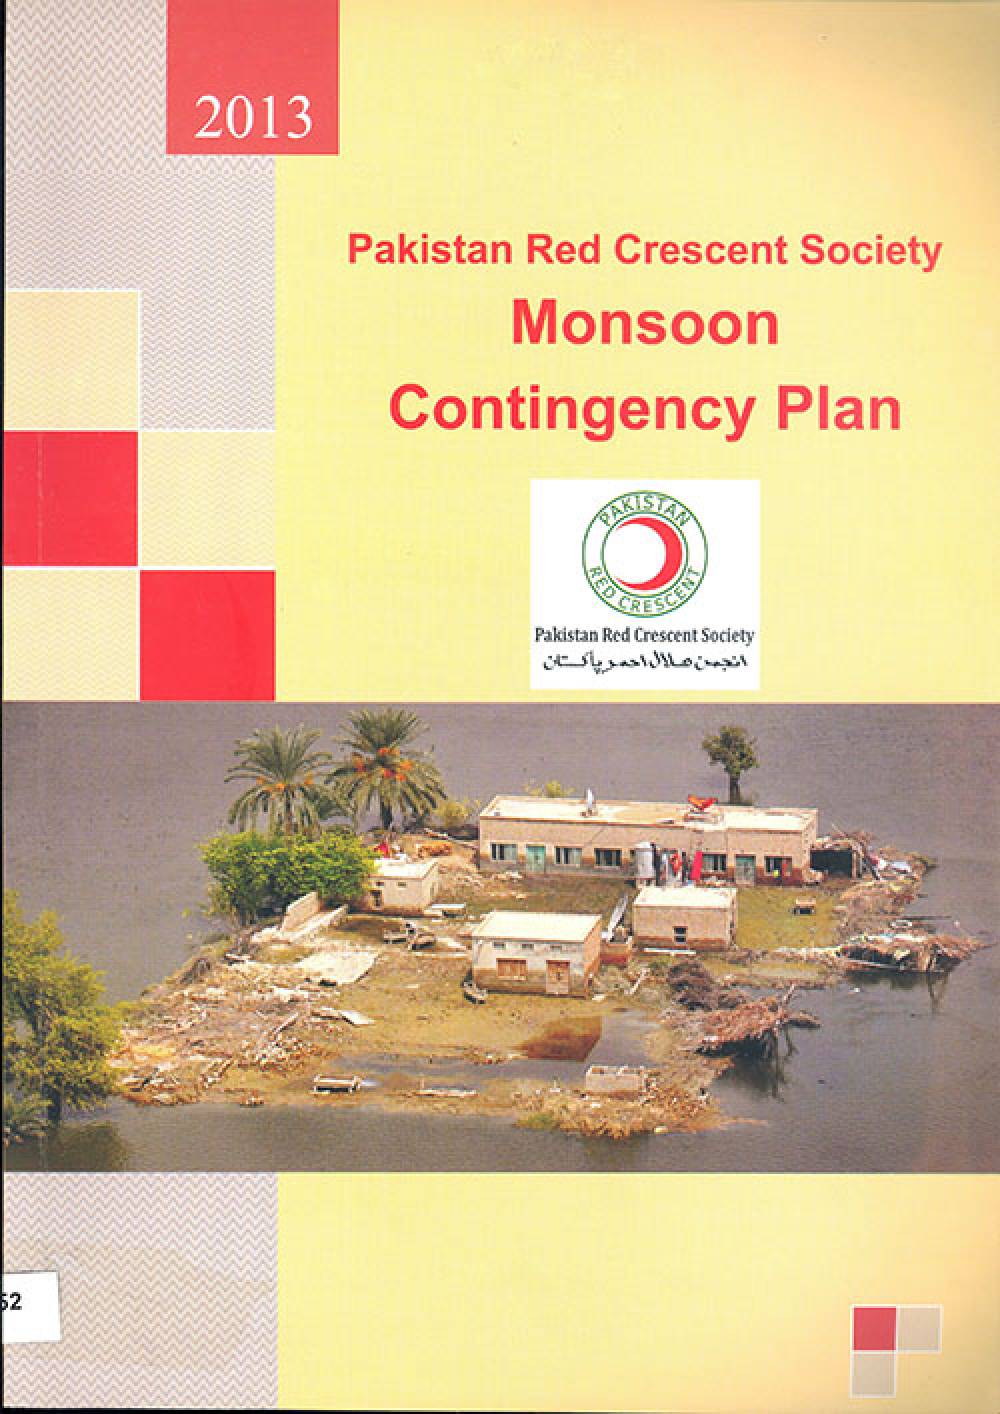 PRCS Monsoon Contingency plan 2013